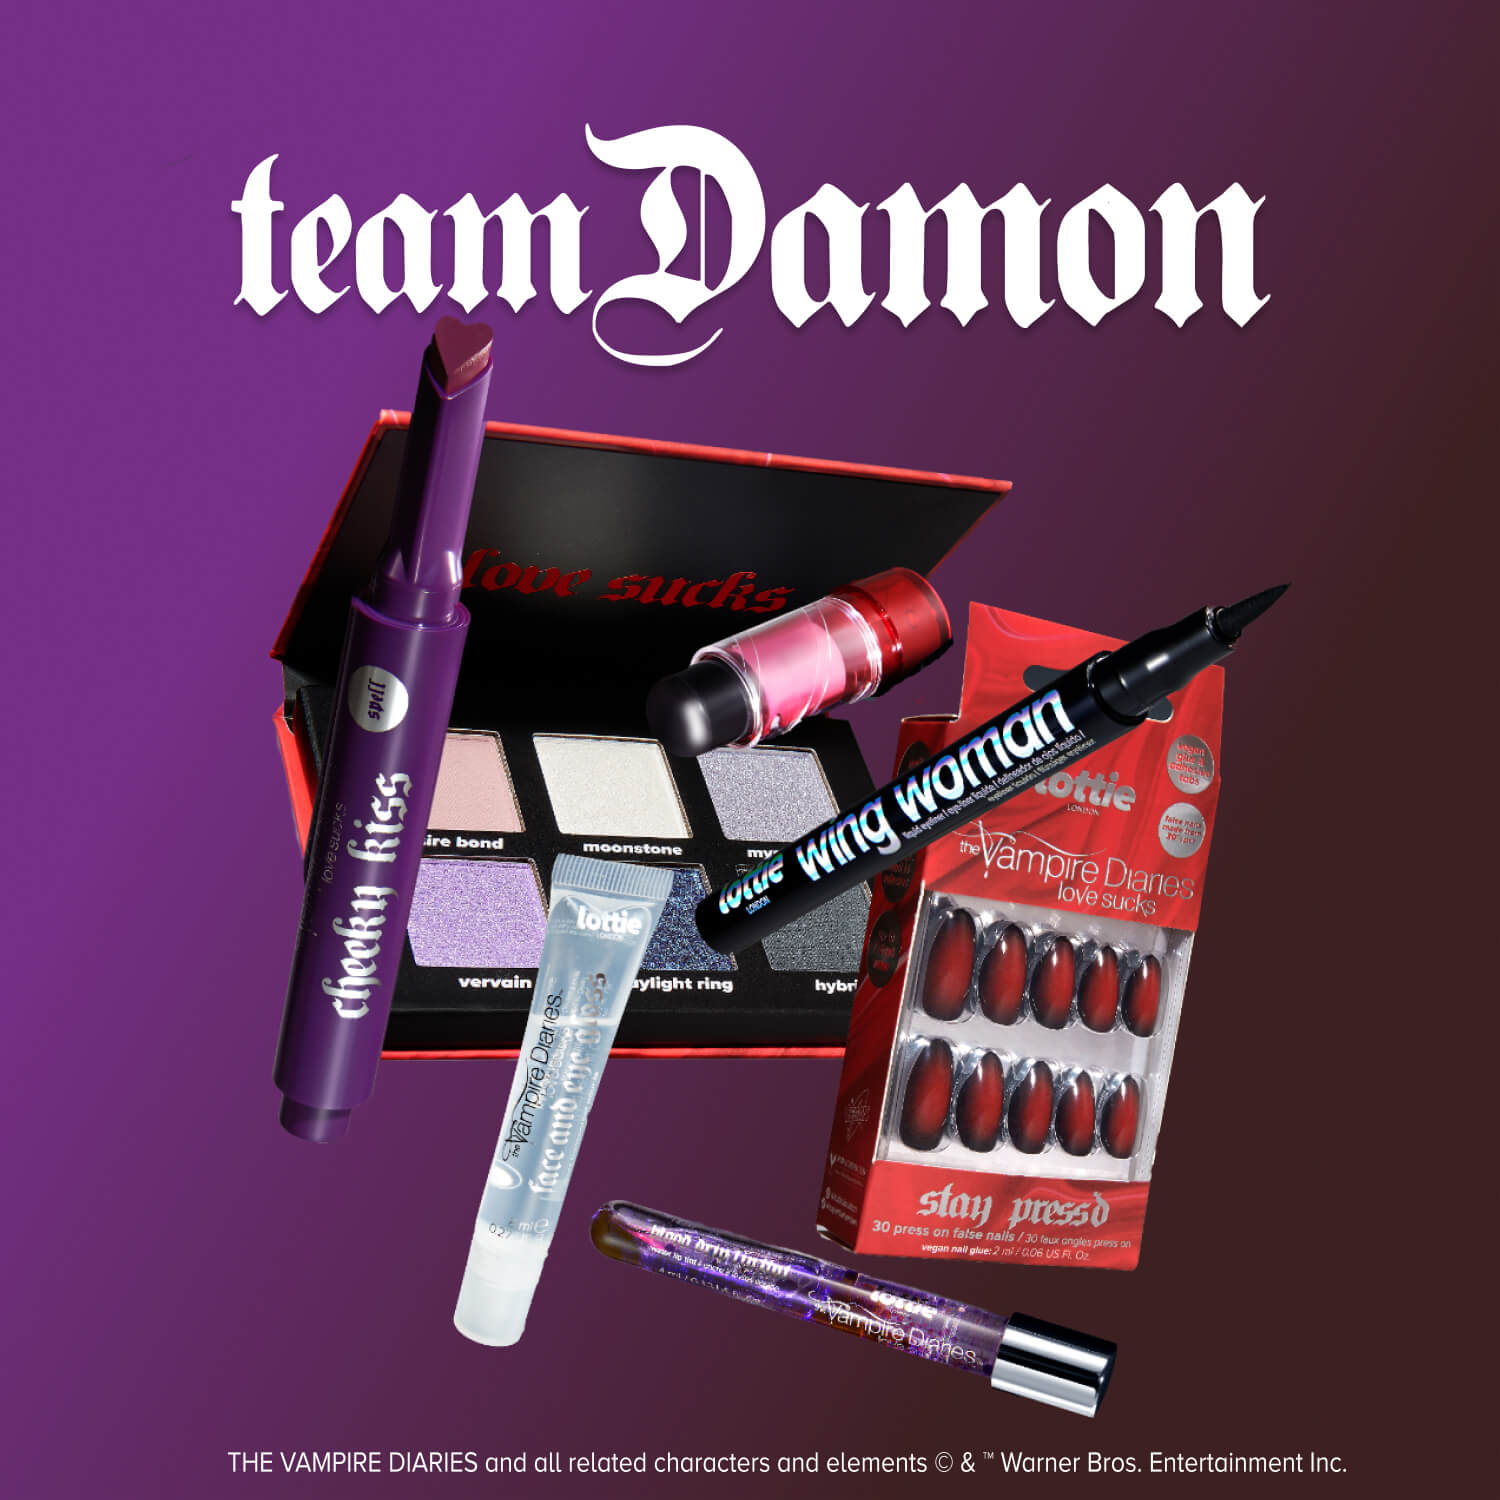 The Vampire Diaries x team Damon bundle